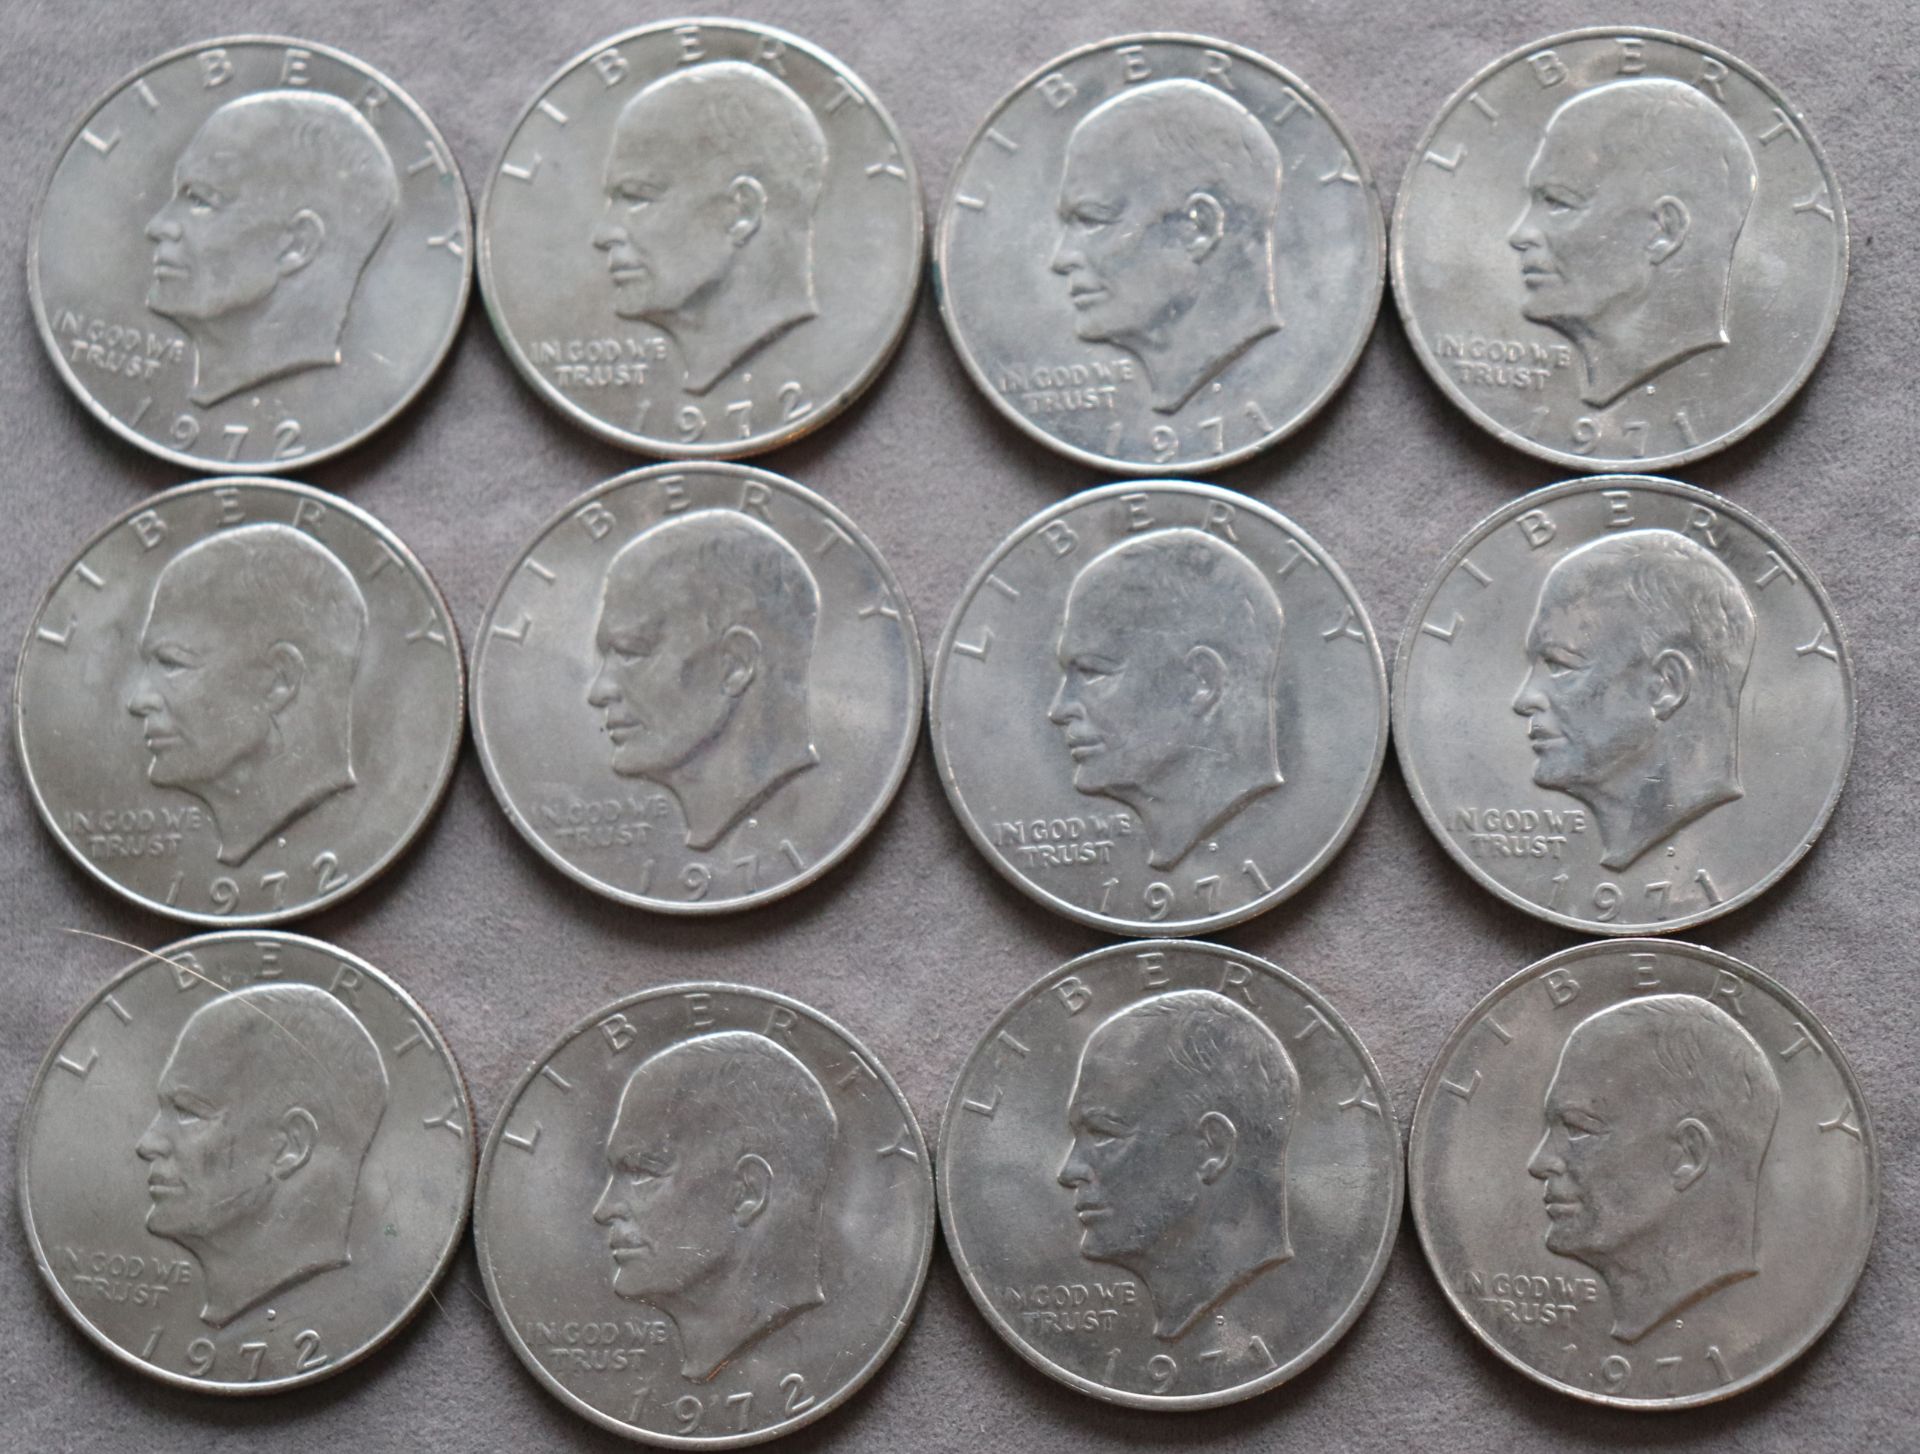 12 Eisenhower dollar coins 1971-1972